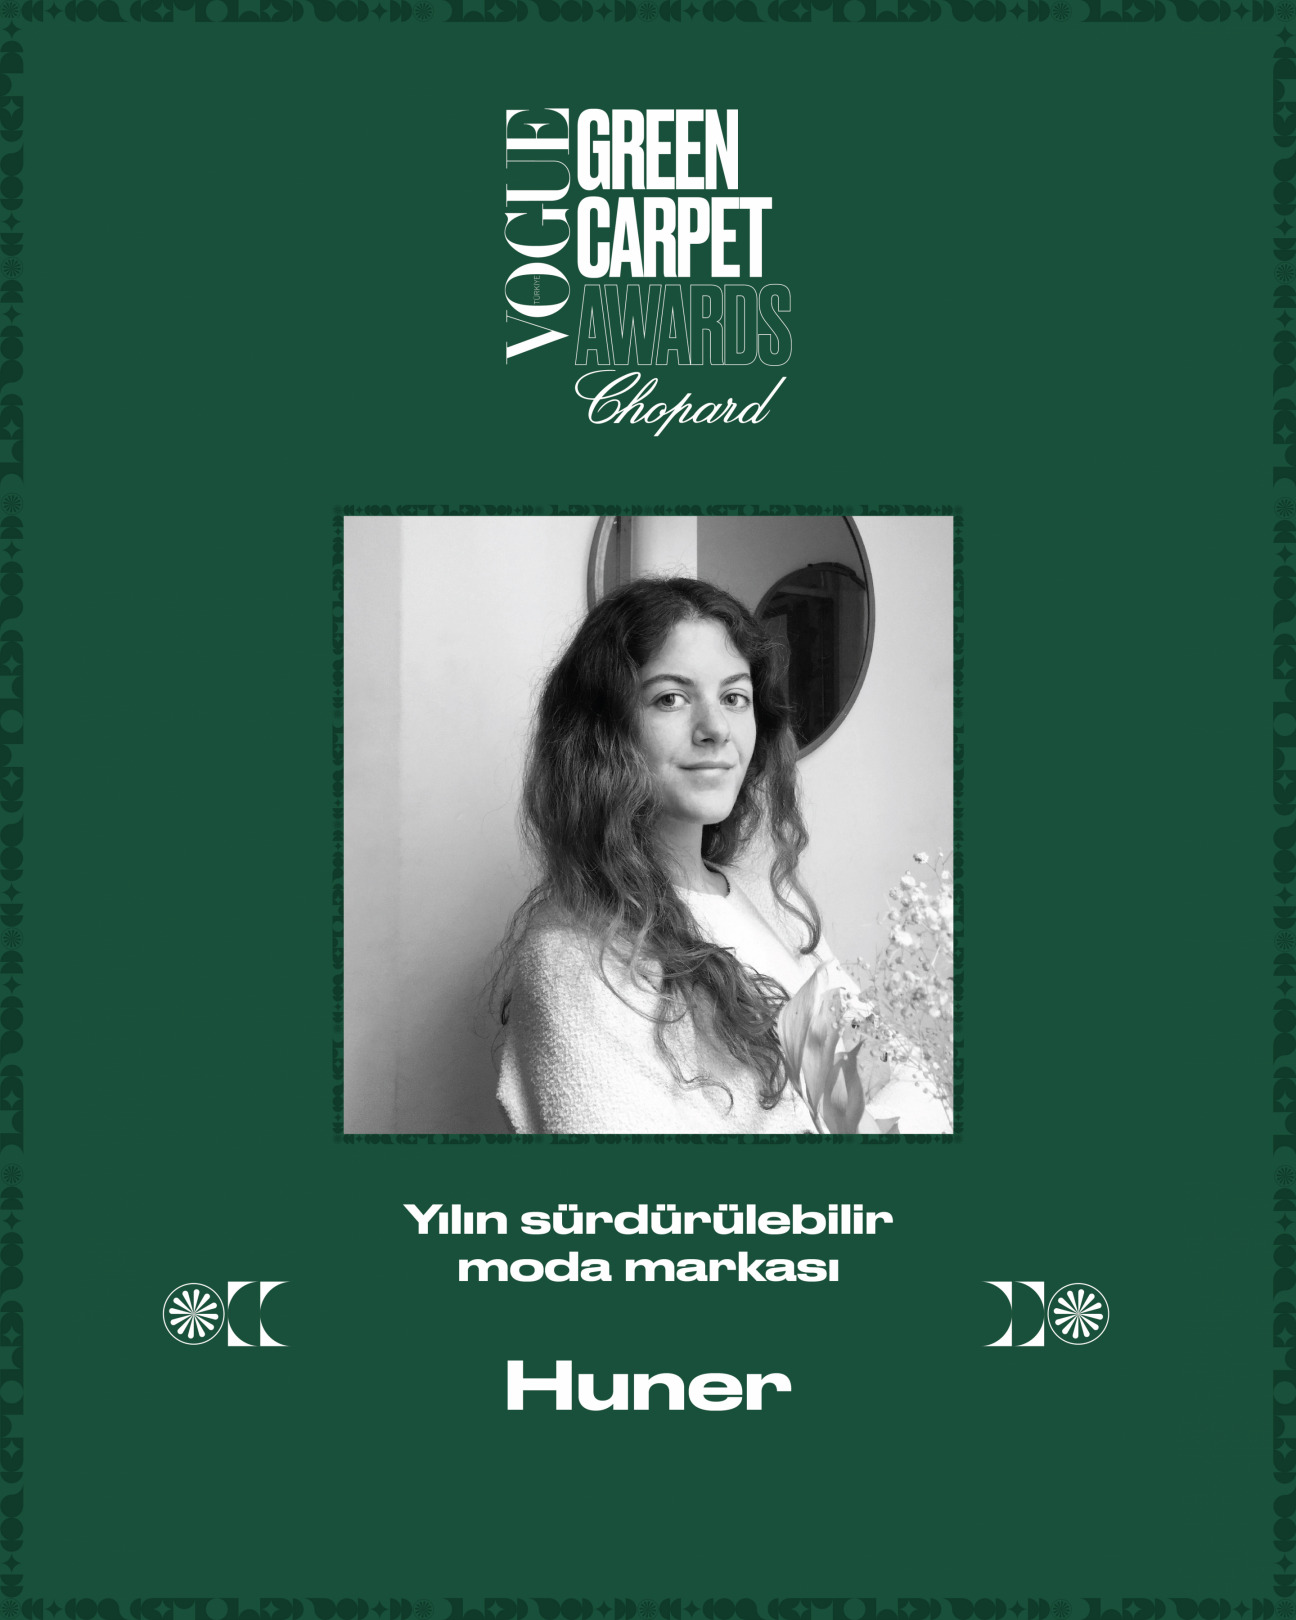 Vogue Green Carpet Awards by Chopard Kazananlar